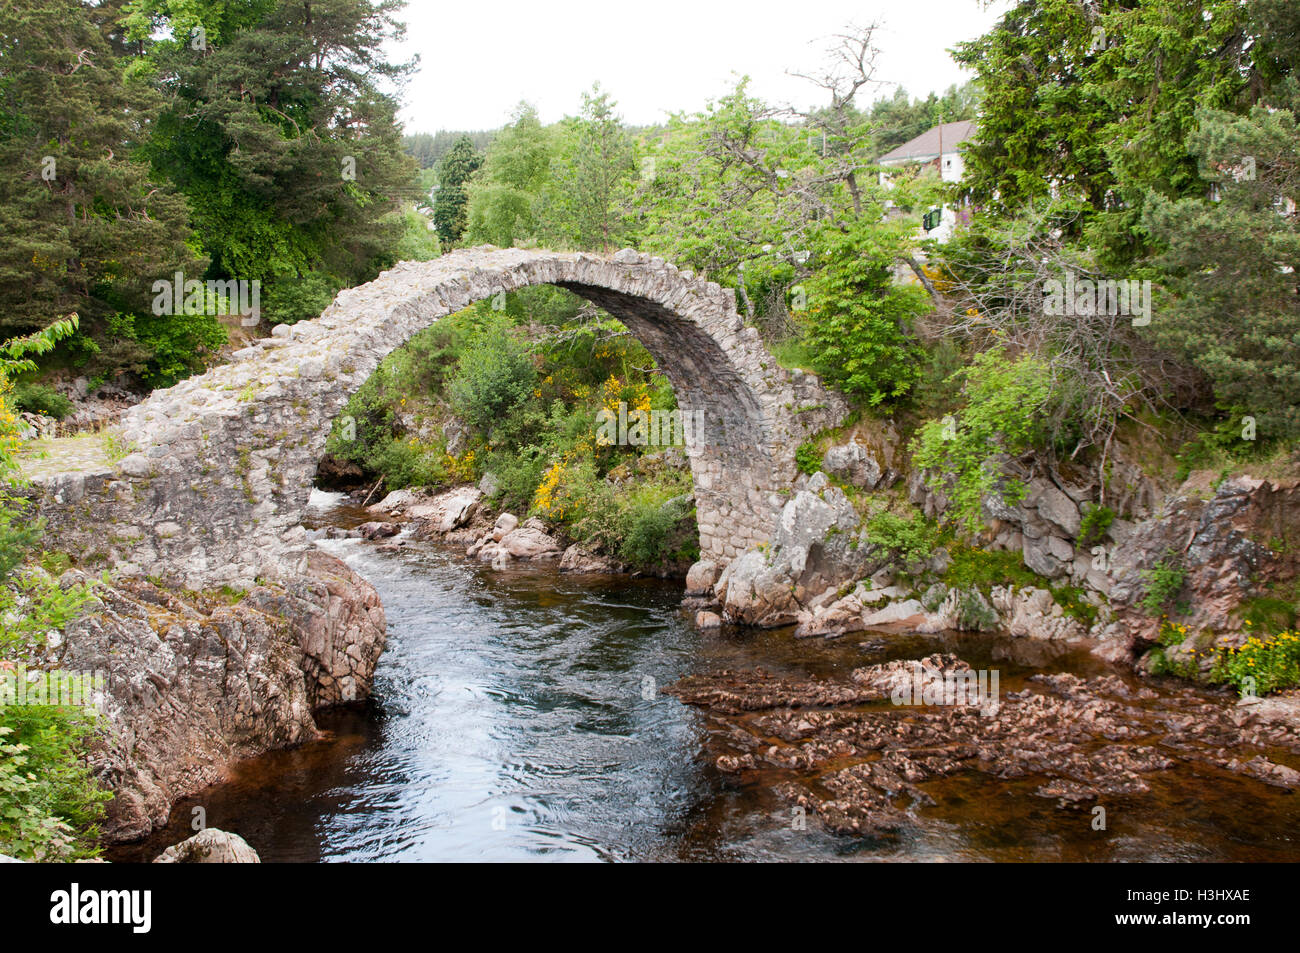 Old stone bridge in the village of Carrbridge - Stock image Stock Photo